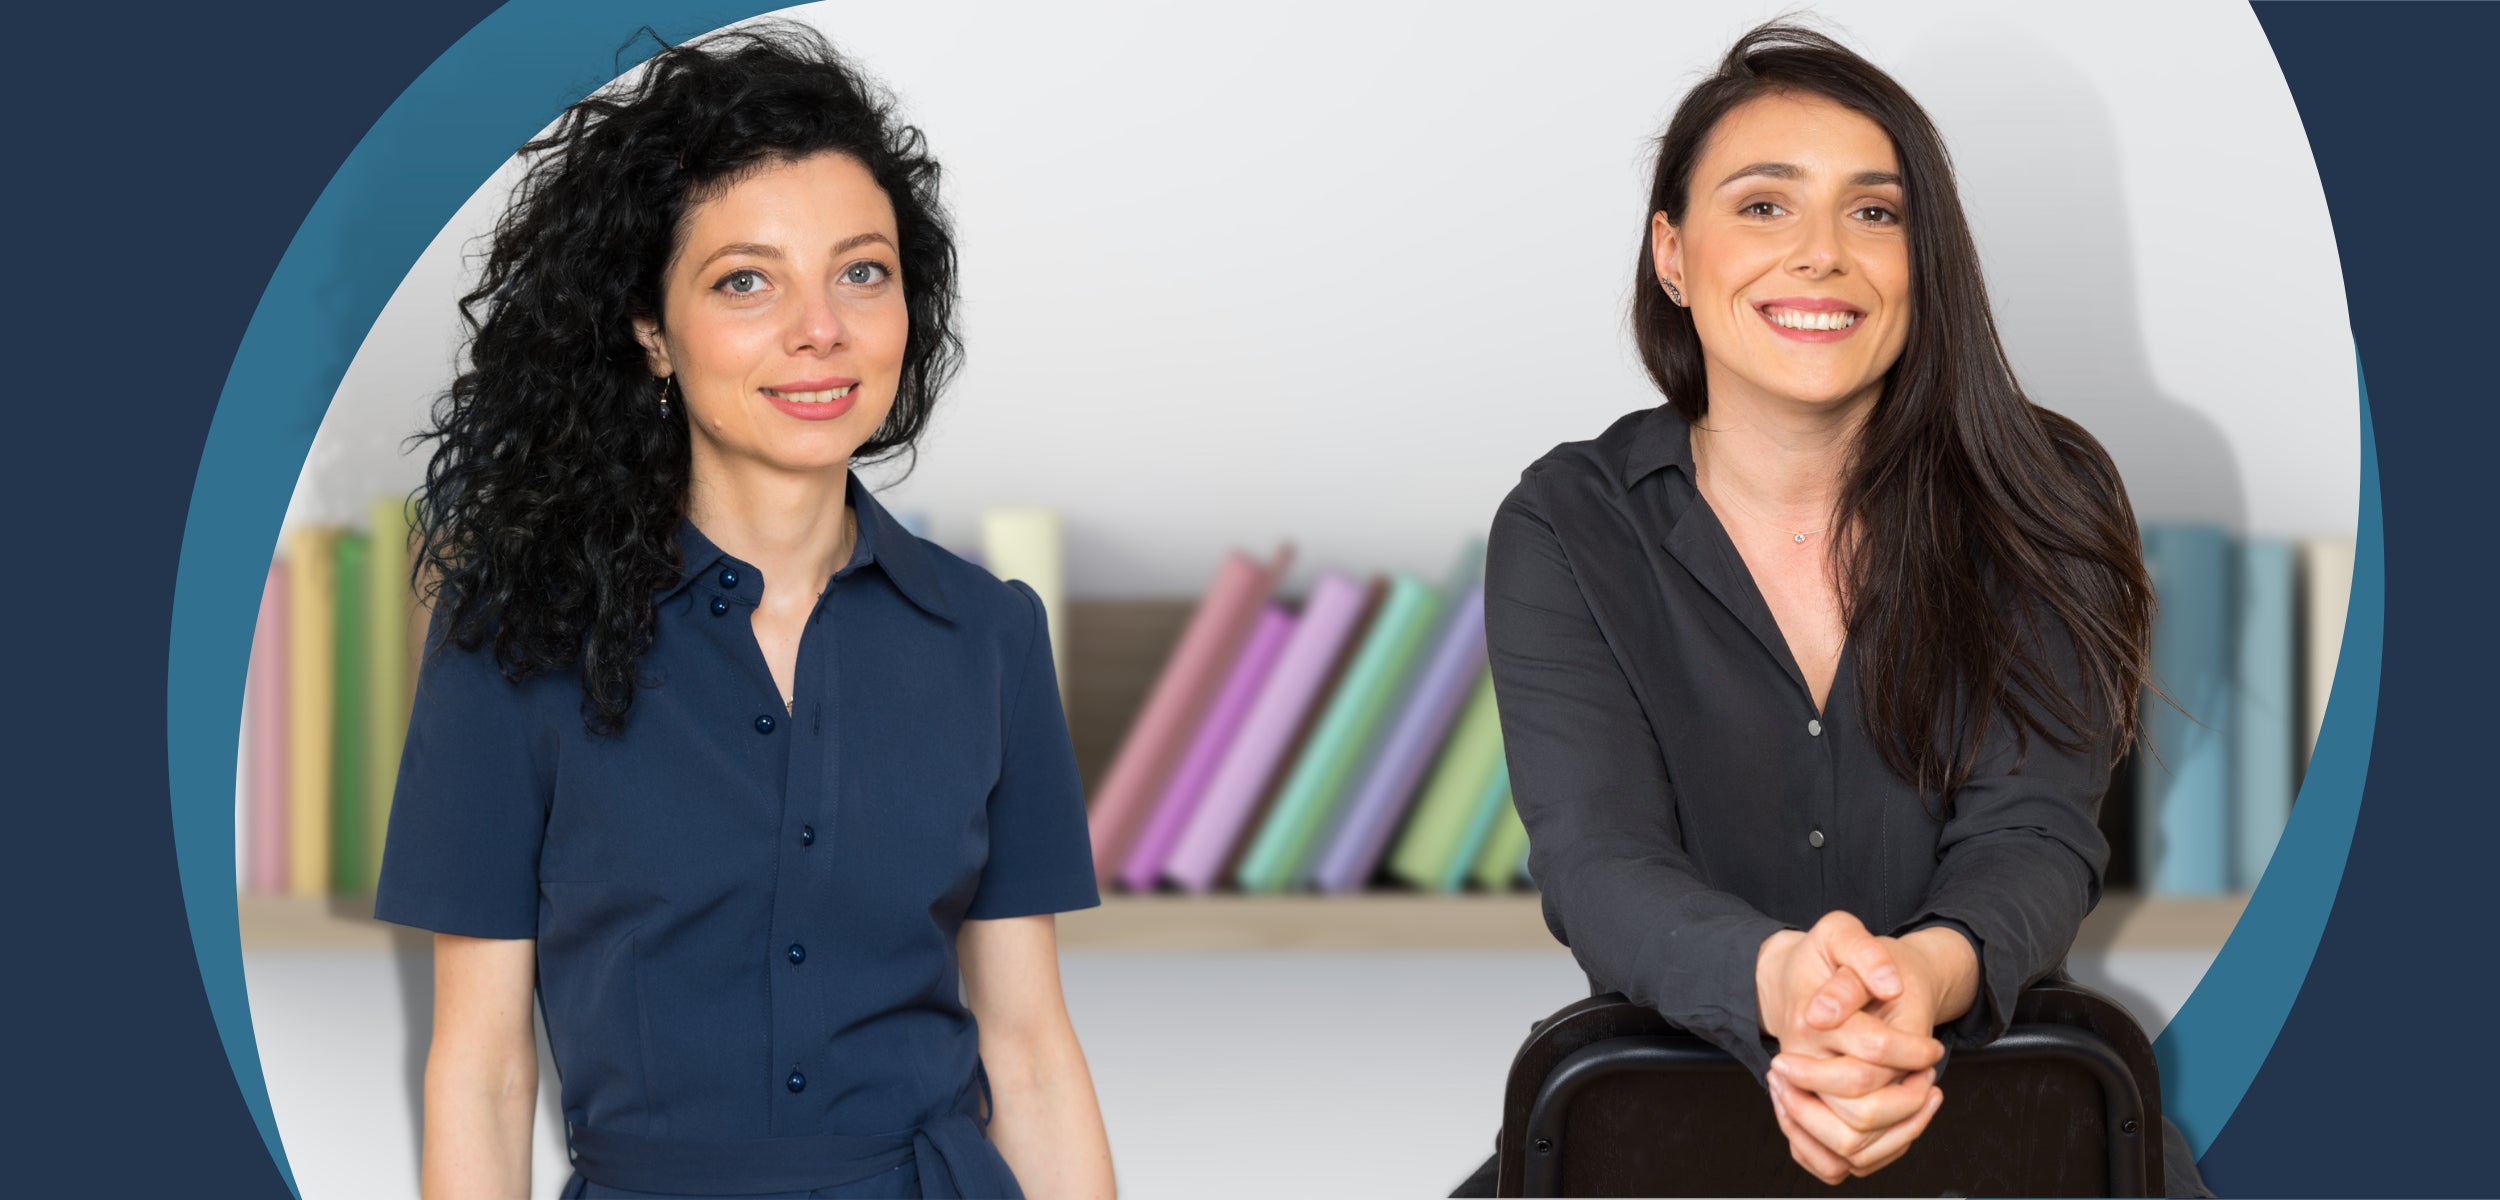 toeasemymind's therapists: Isabela Stanciu and Mara Craciunescu